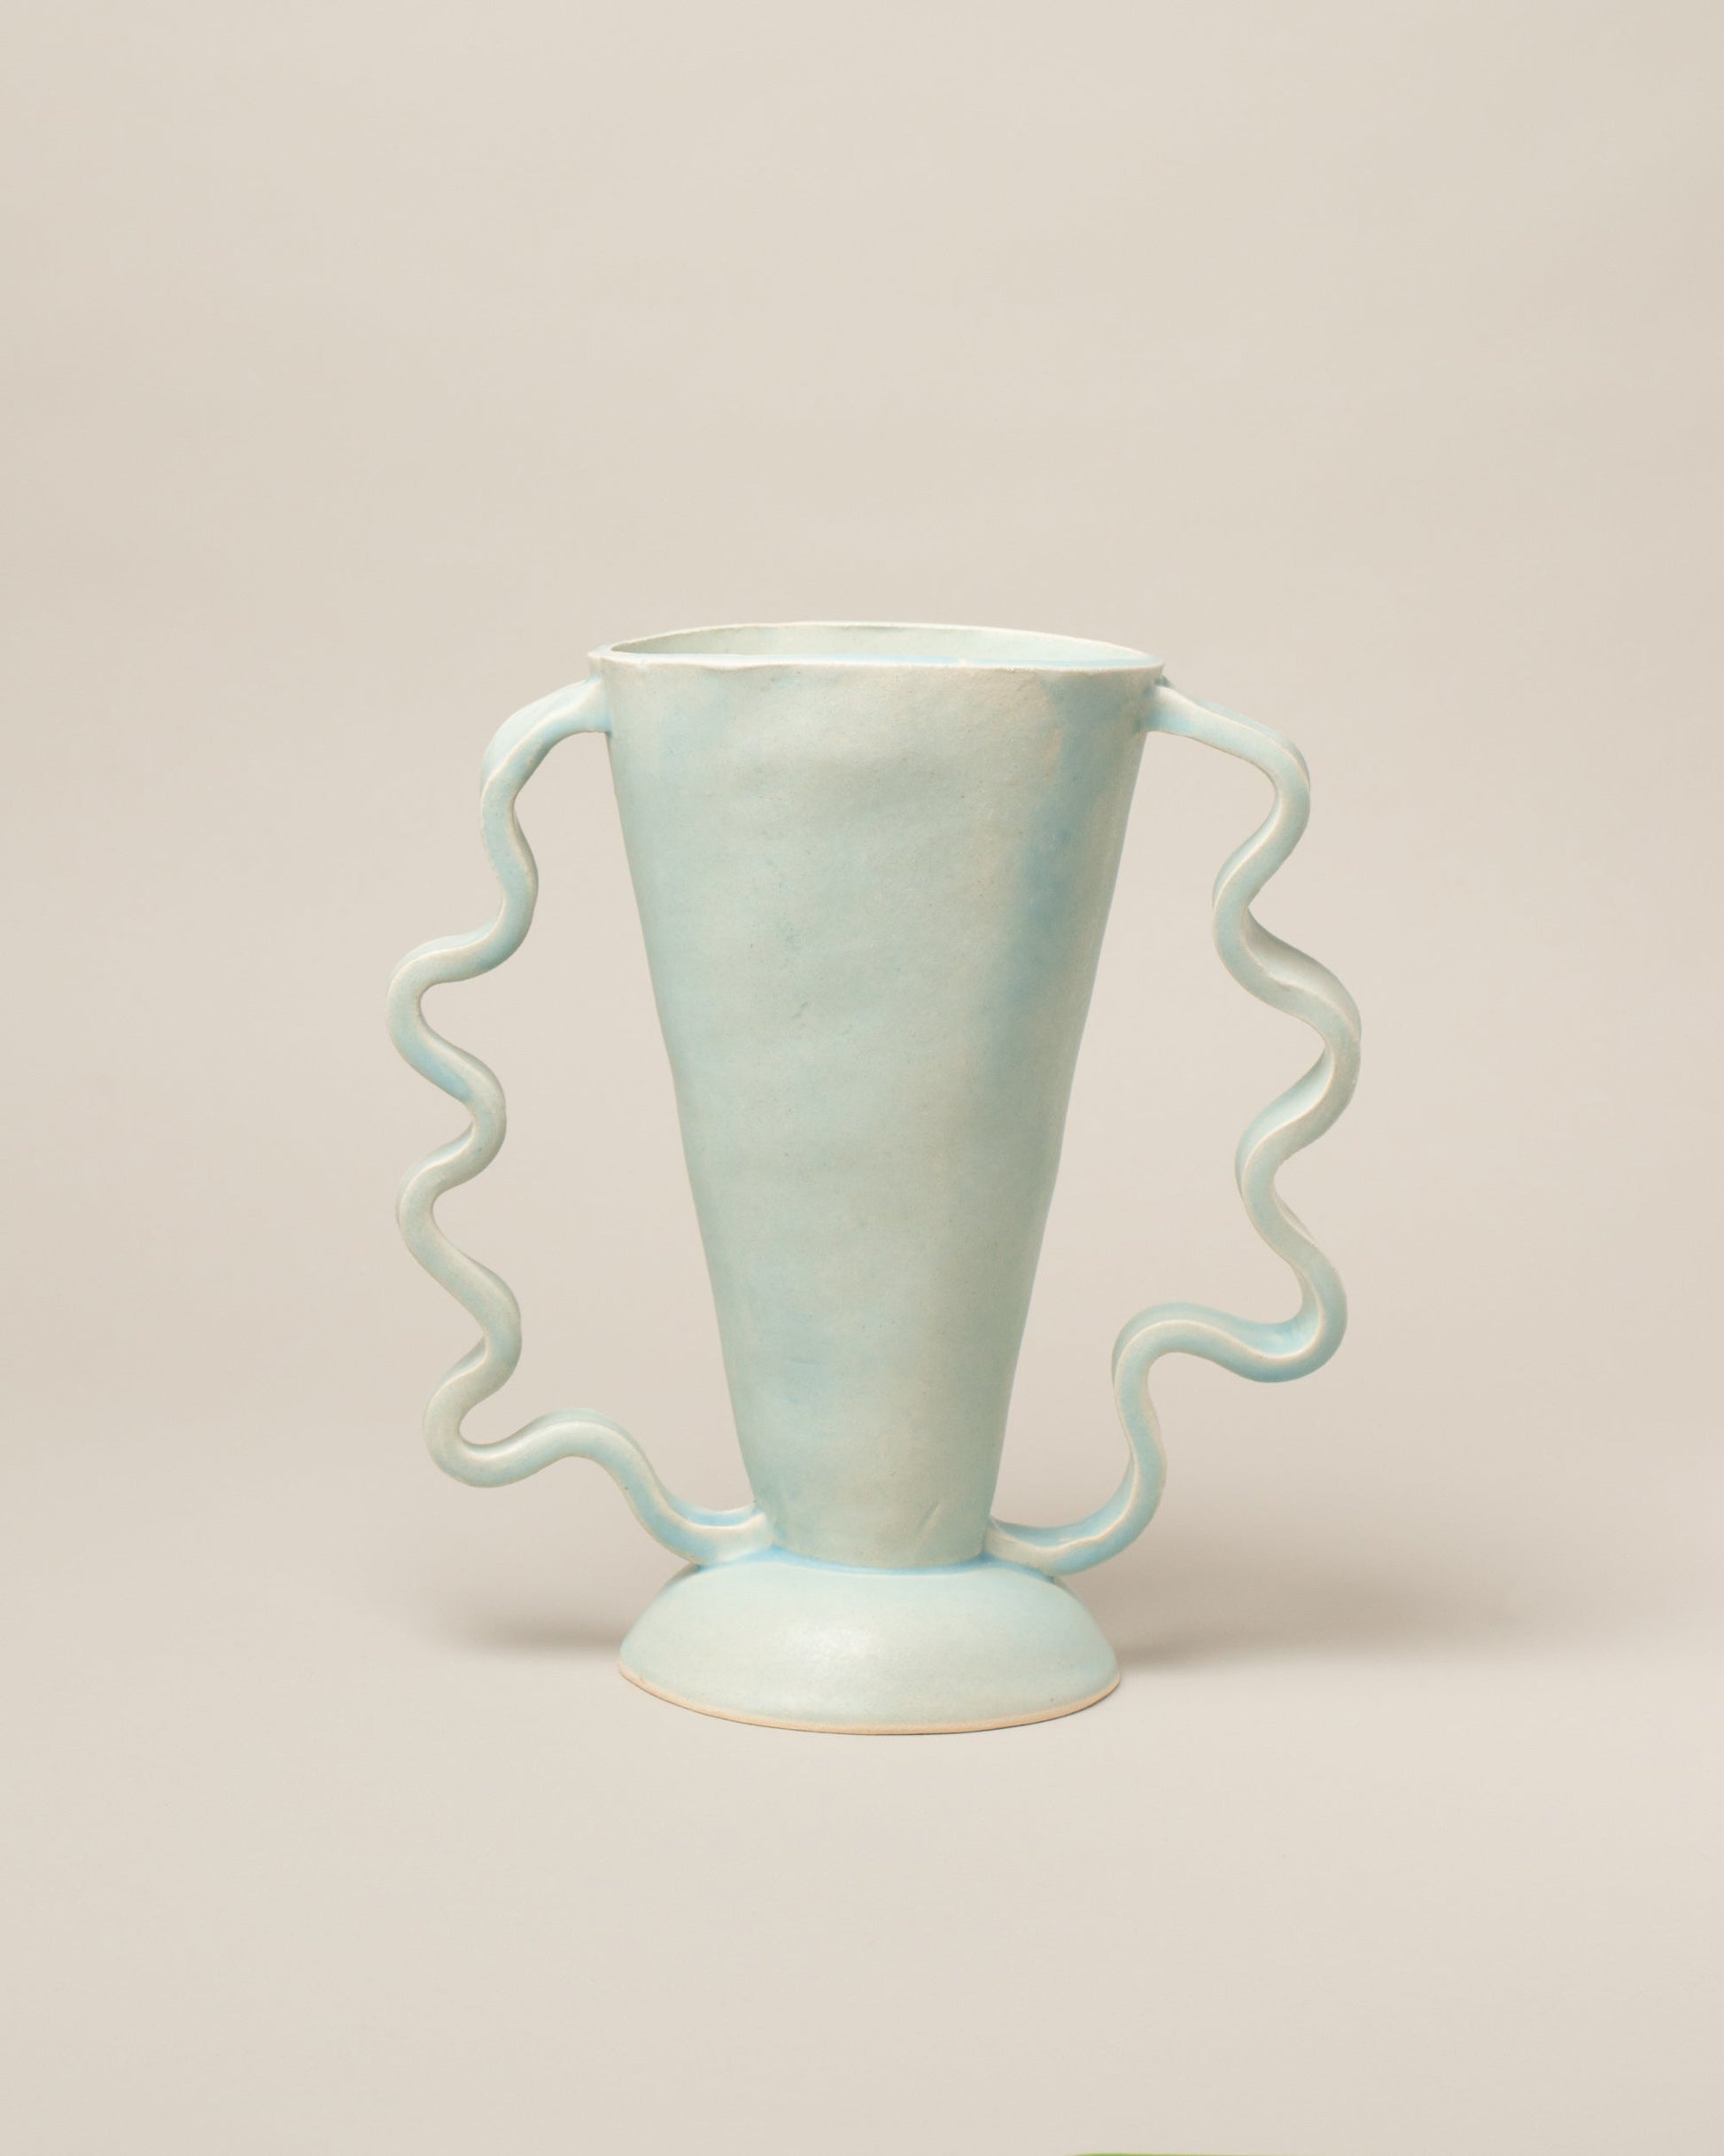 Morgan Peck Stone Blue Stretch Vase on light color background.